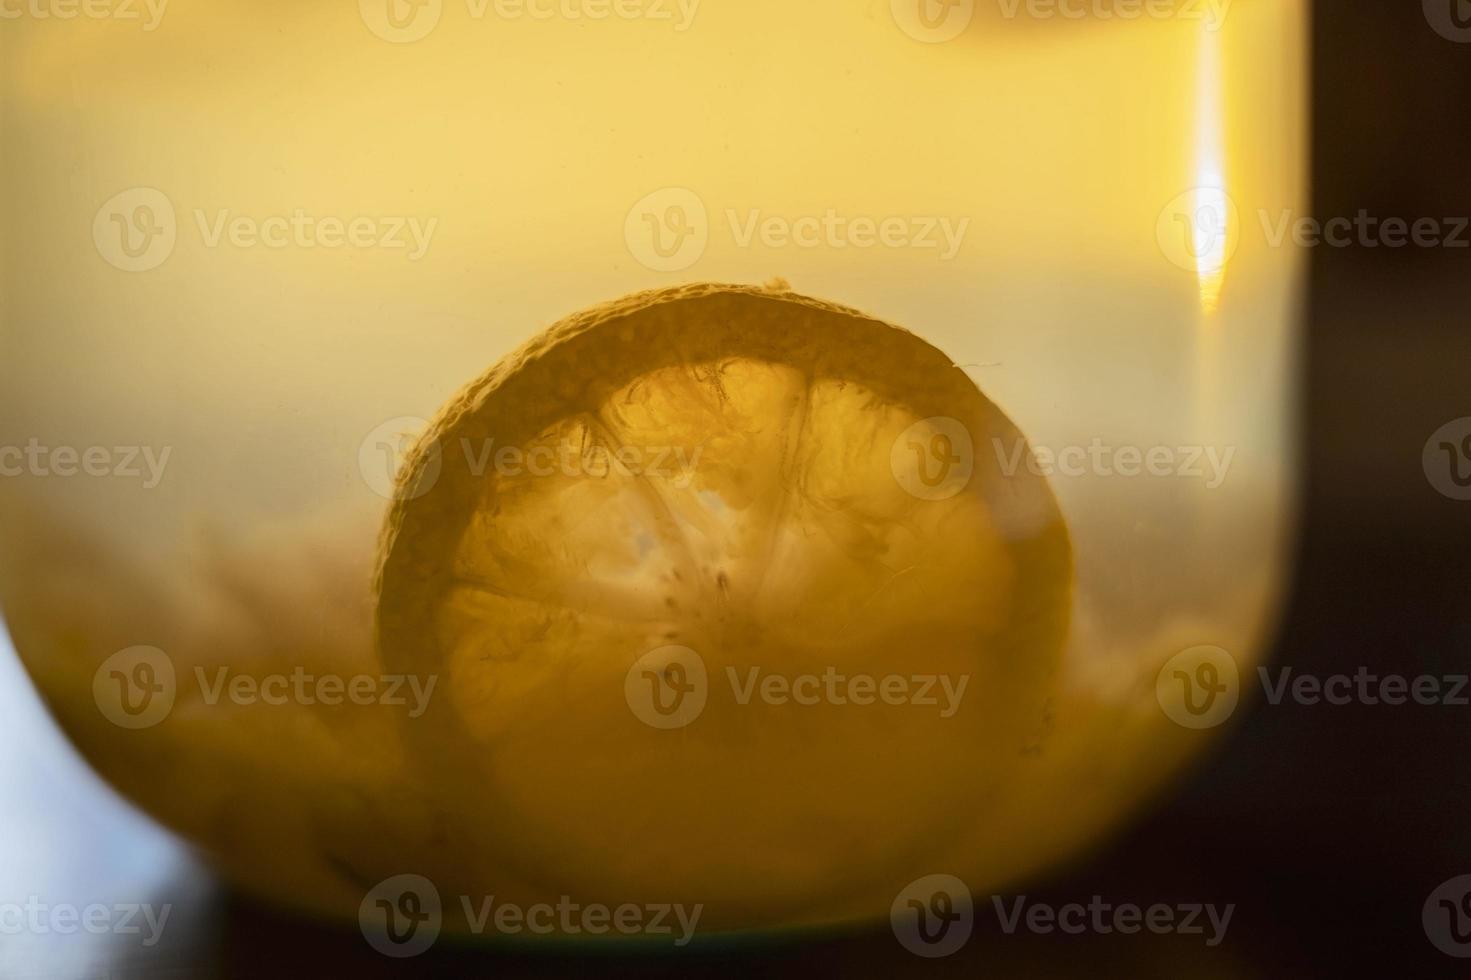 rodaja de limón en compota de manzana en un frasco de vidrio sobre la mesa, luz suave de la tarde foto